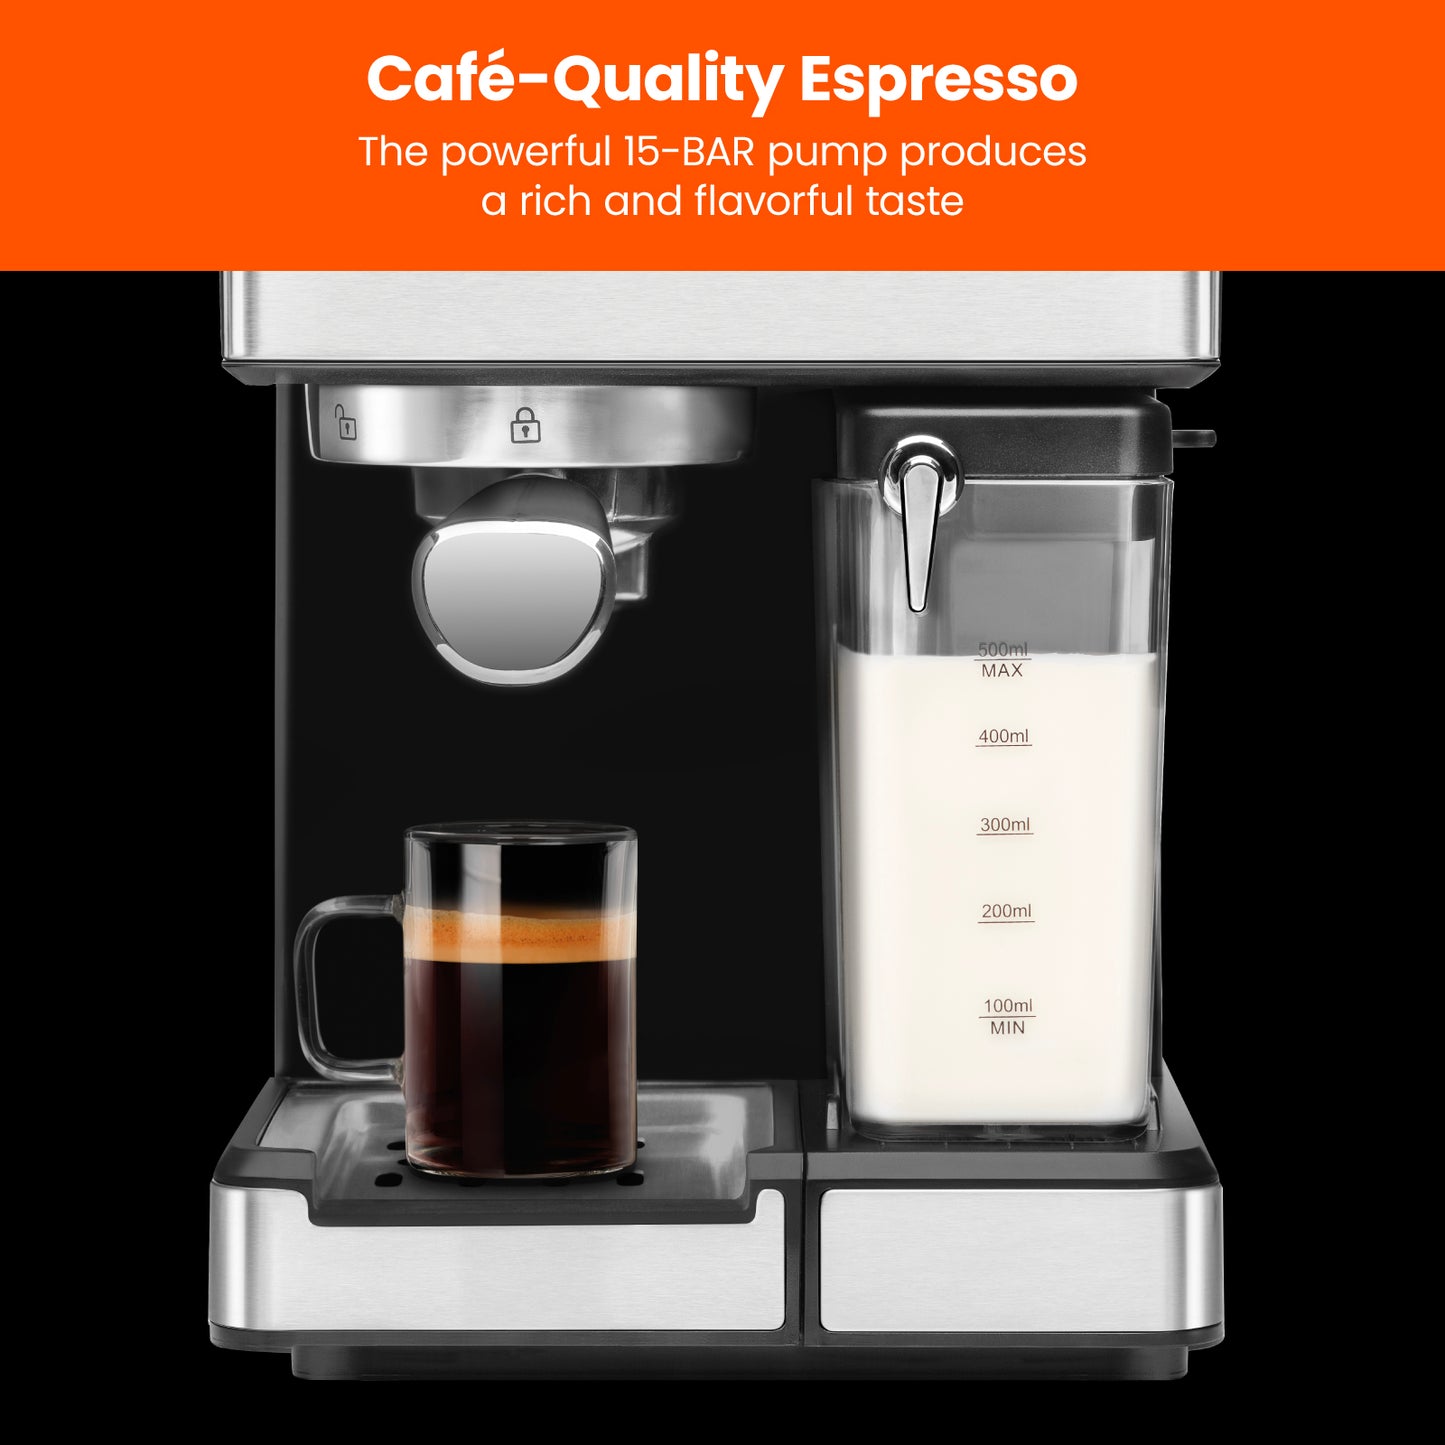 Chefman Barista Pro Plus Espresso Machine ,Black